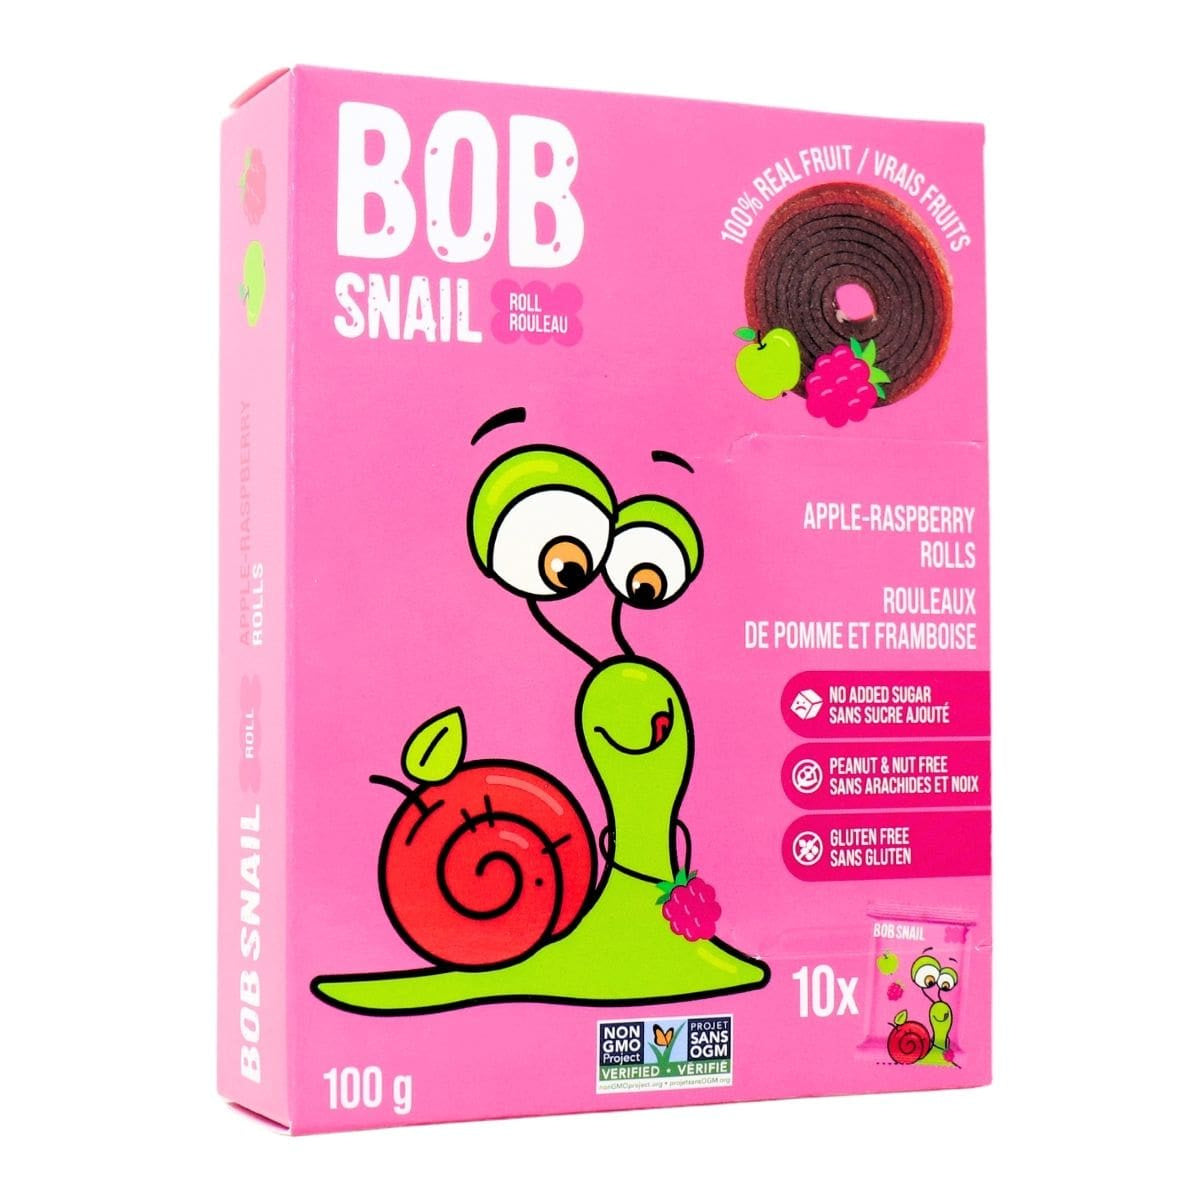 Bob Snail Fruit Rolls Apple Raspberry Box of 5x100g (European)